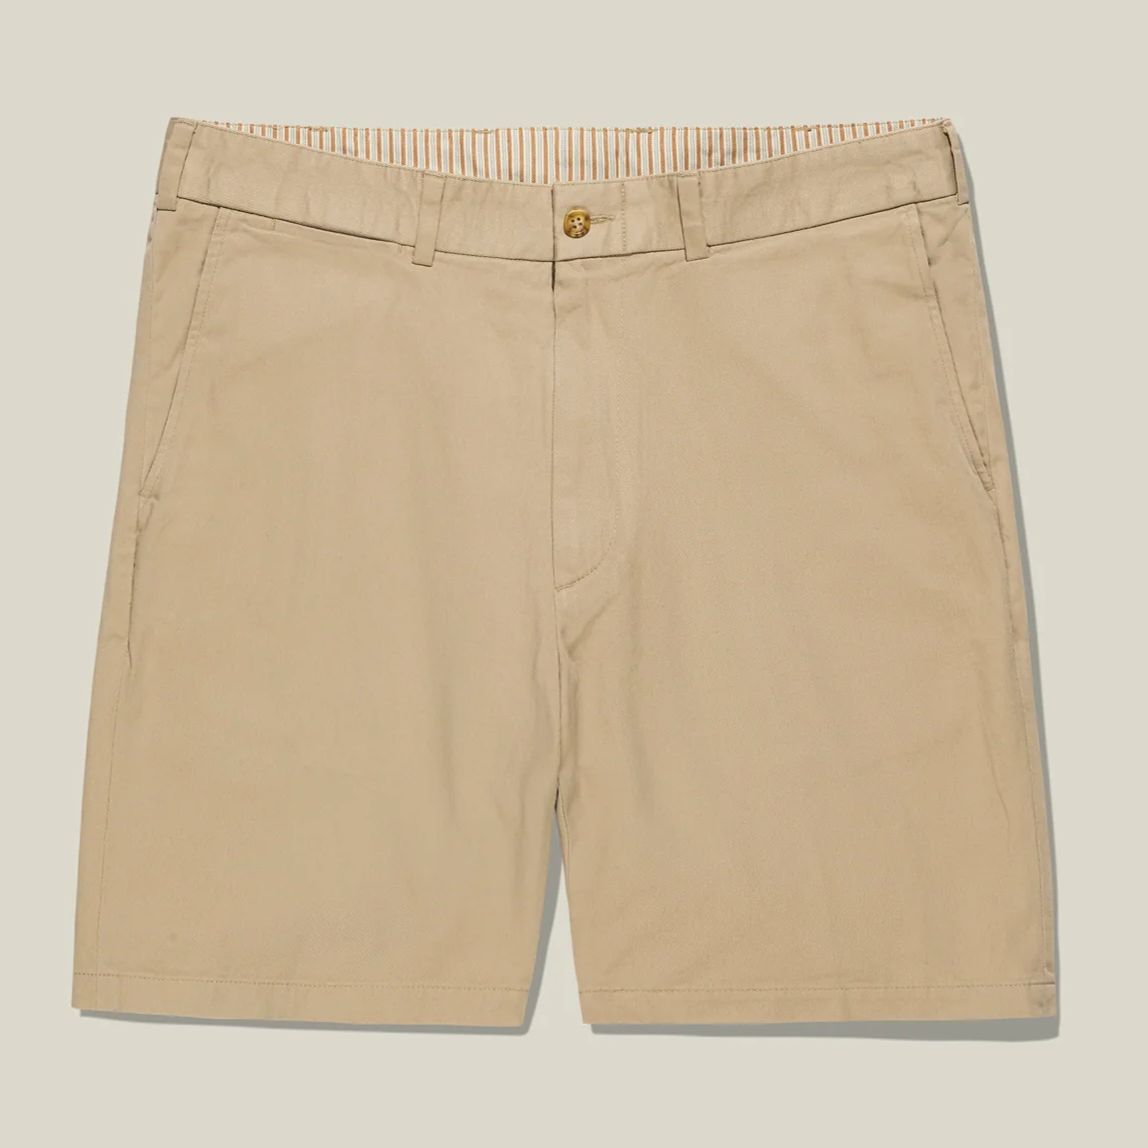 M2 Classic Fit Vintage Twill Shorts in Khaki by Bills Khakis